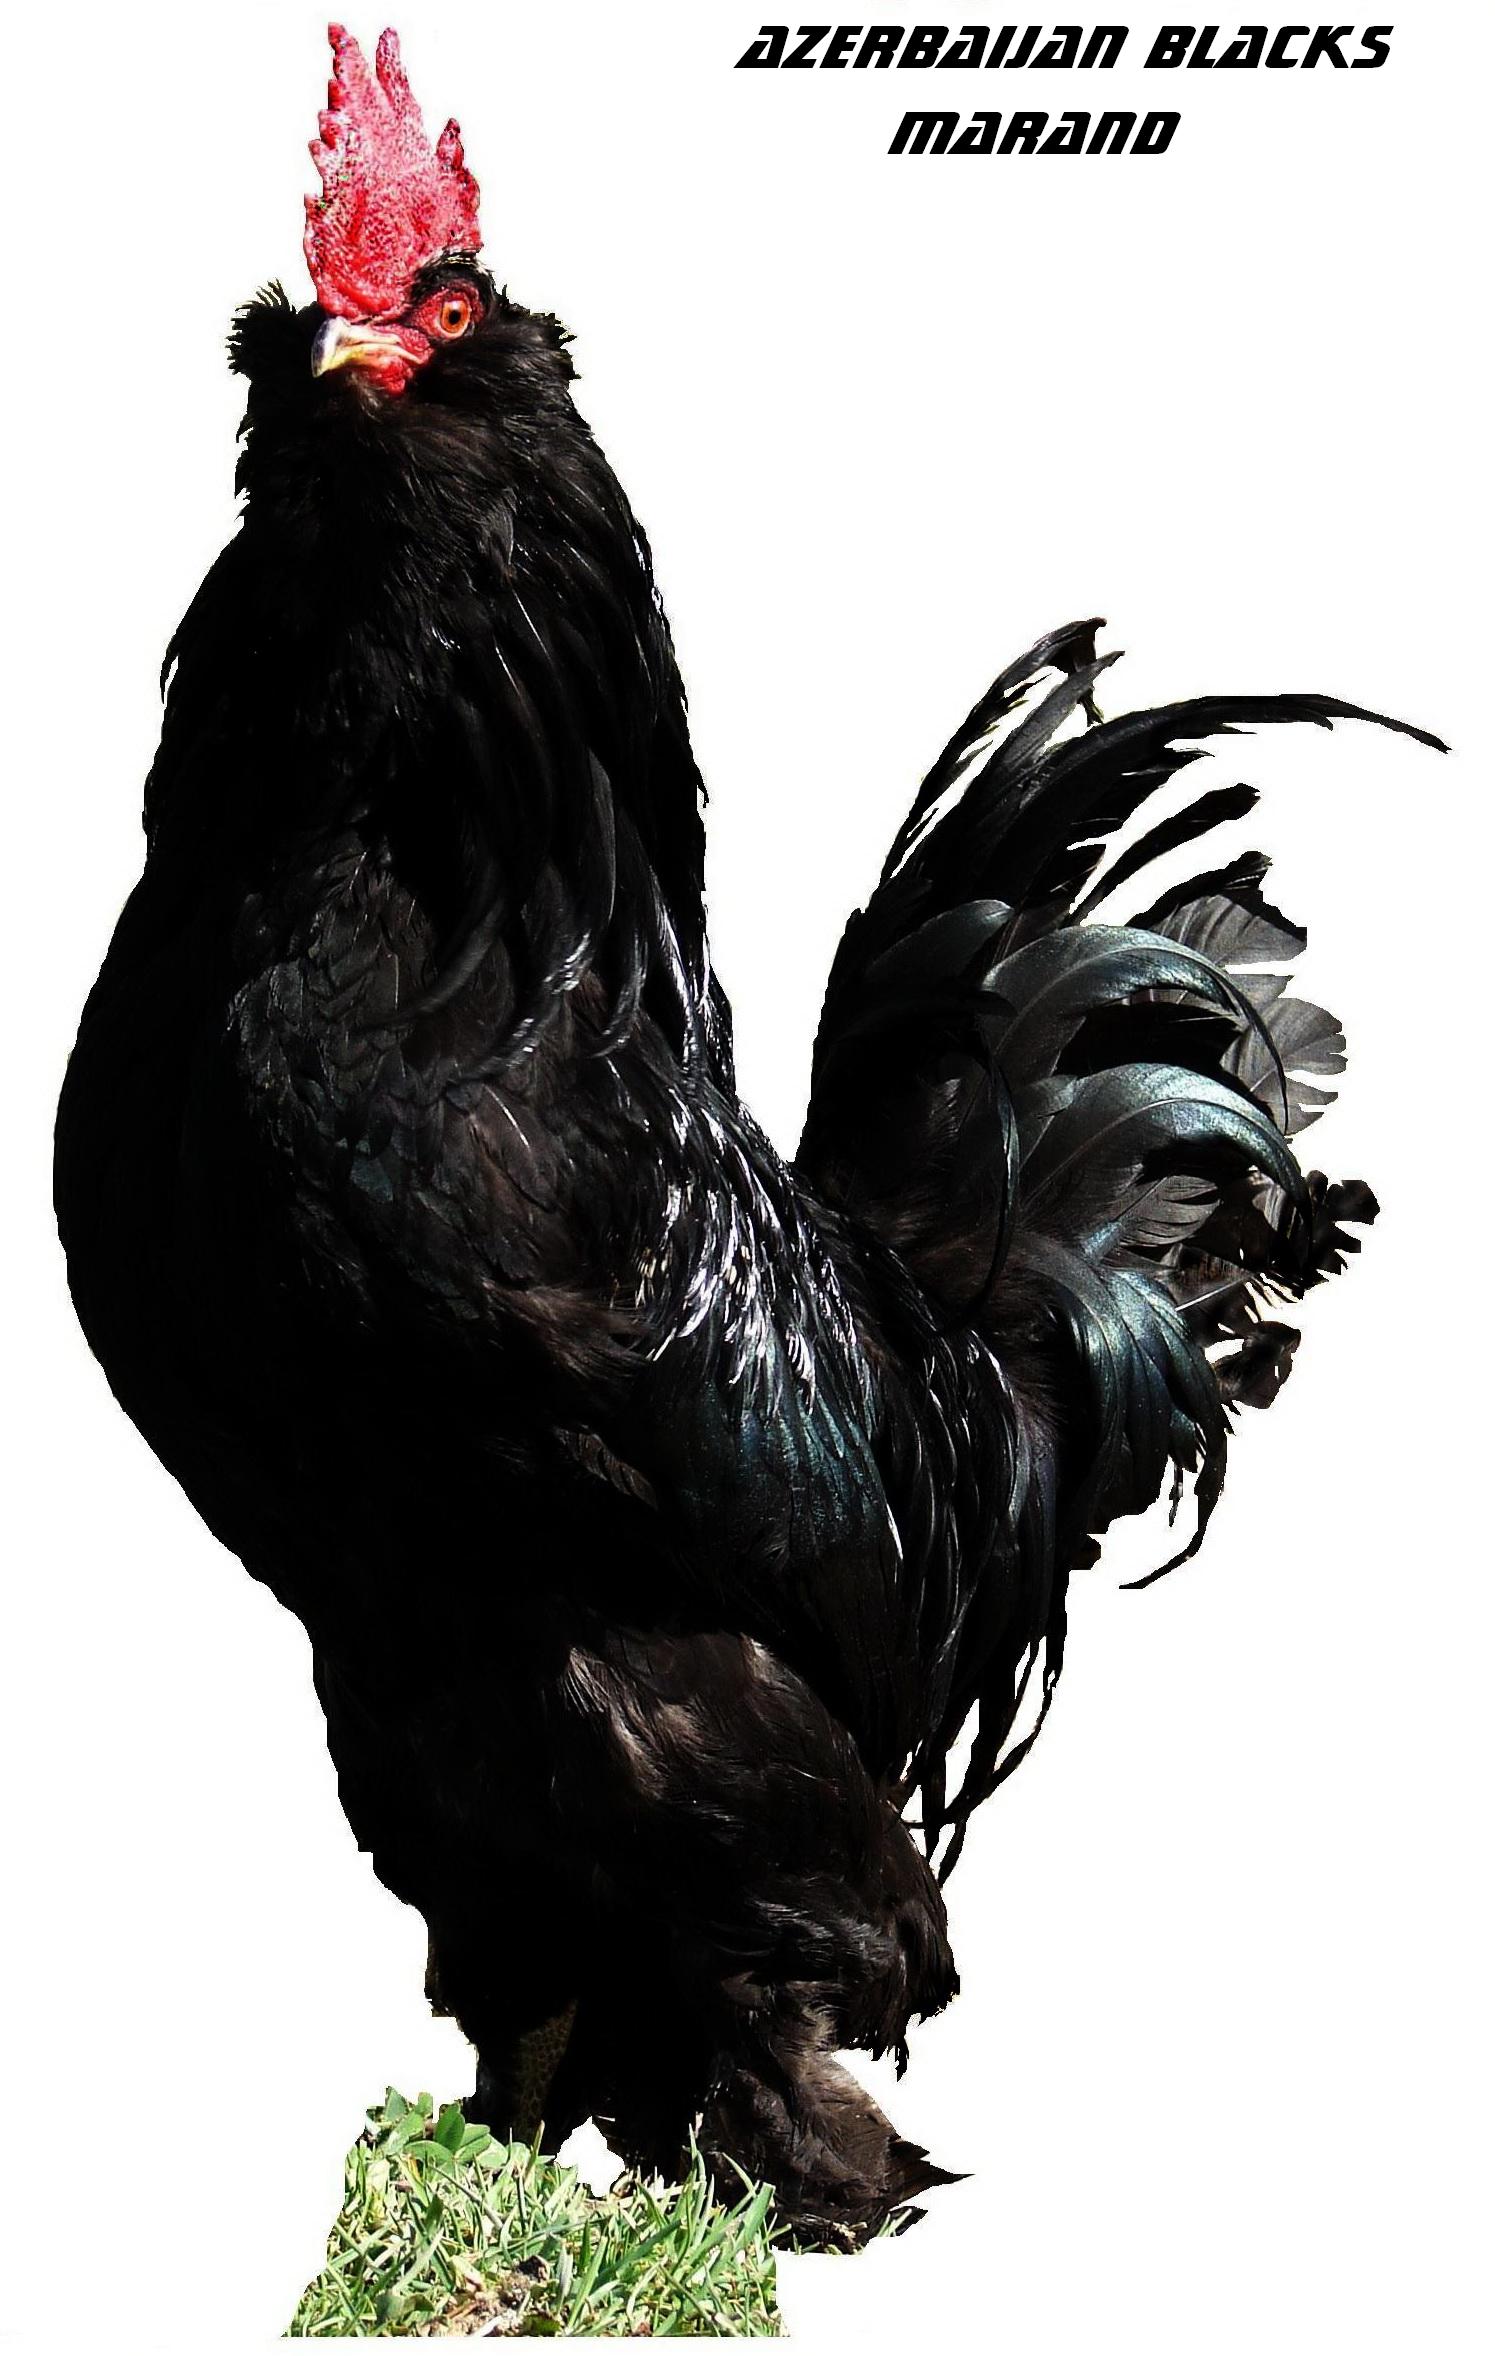 Azerbaijan  
Rare Breed Poultry
Azerbaijan breeds
rare race 
Marand